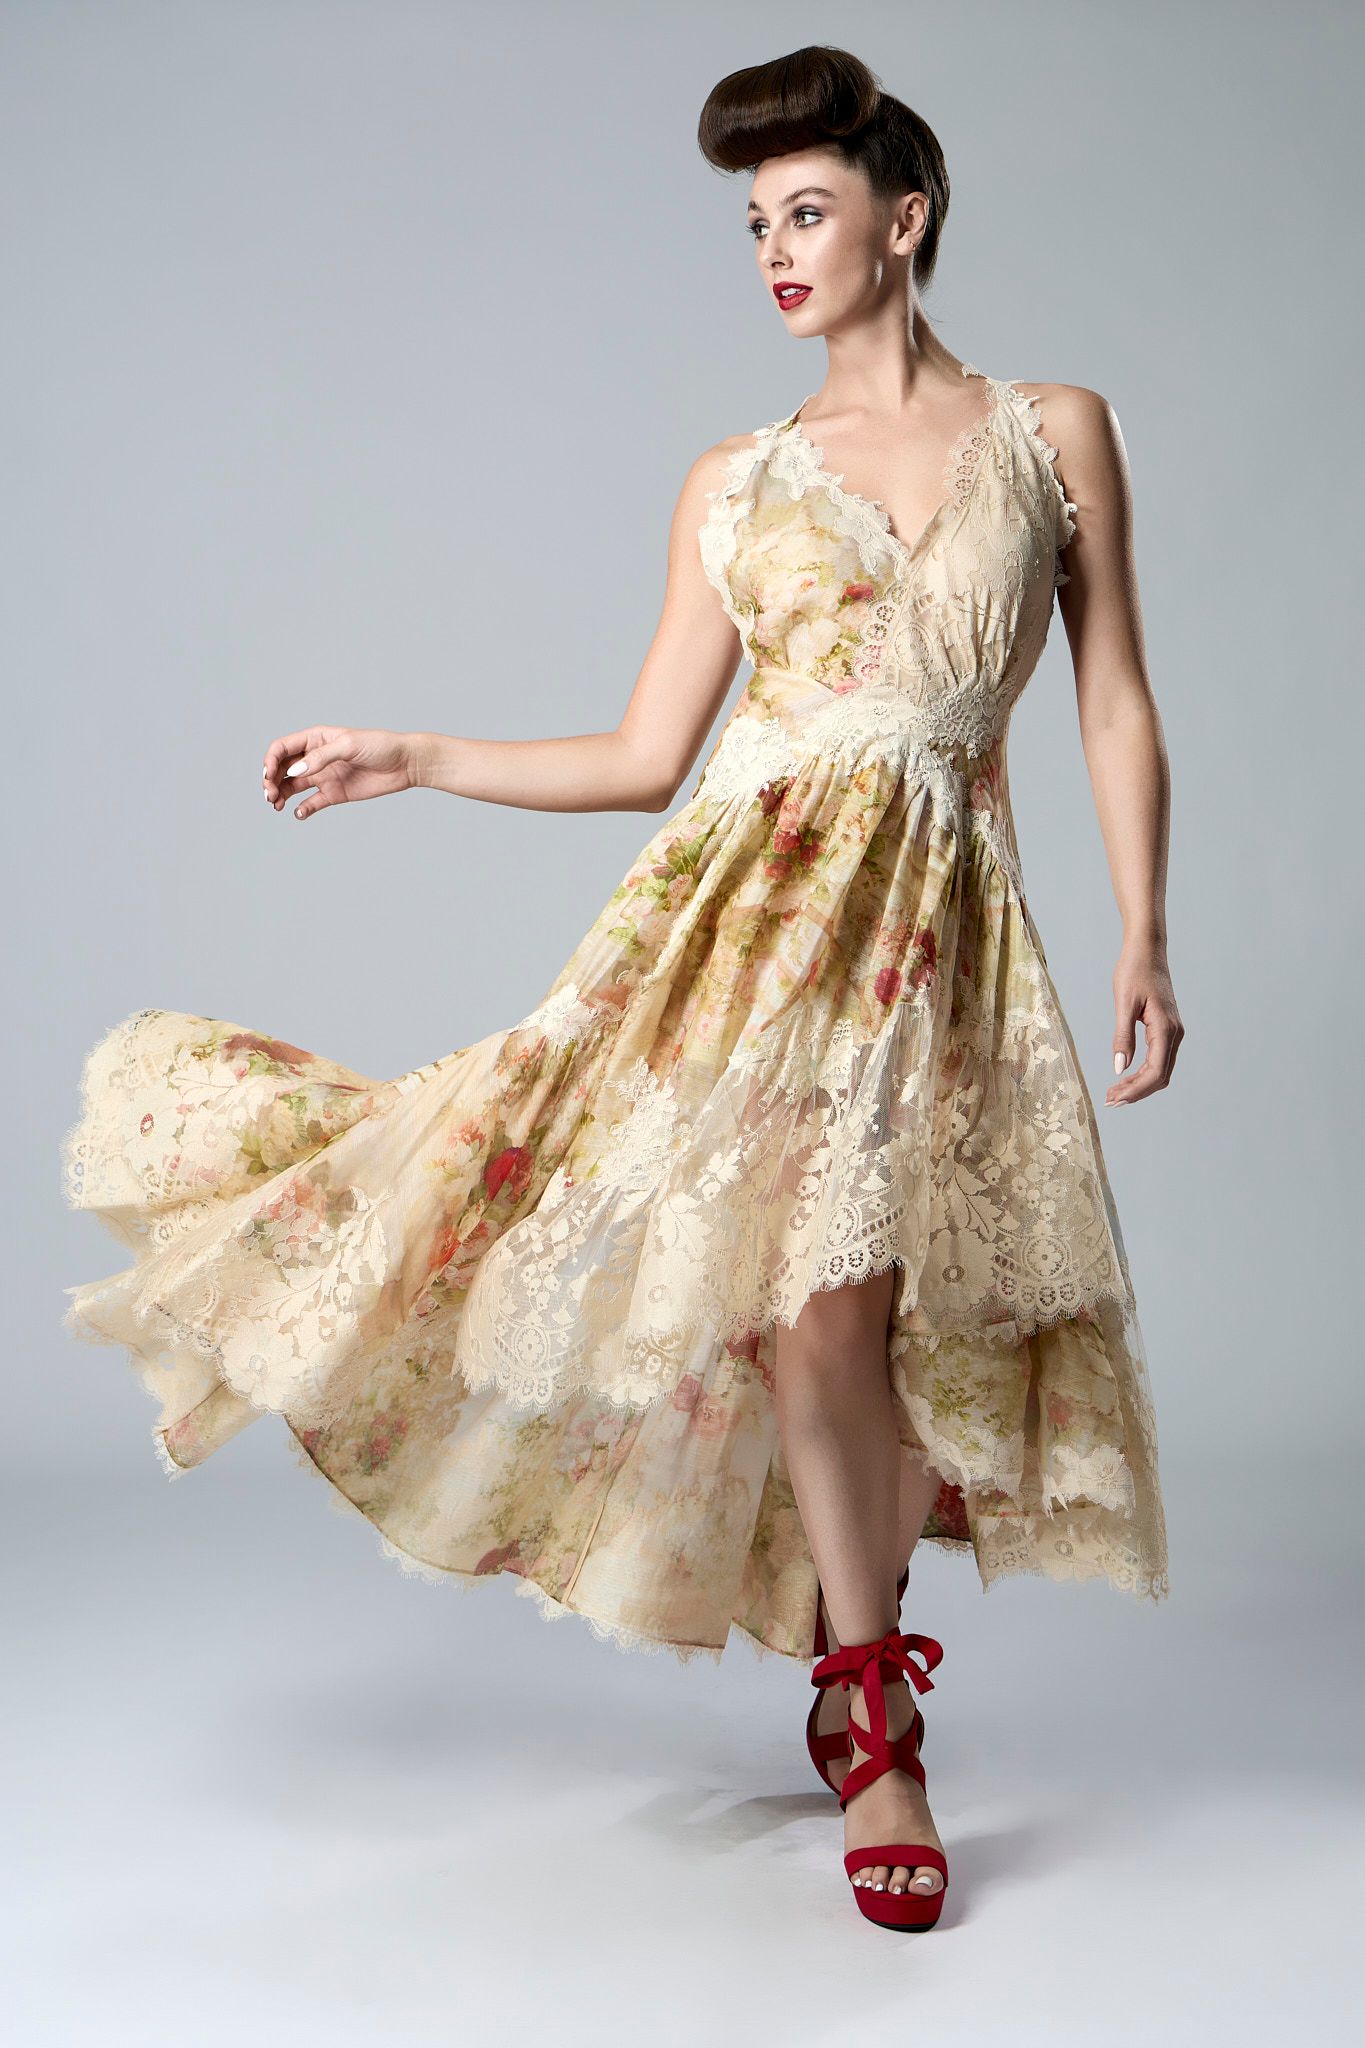 International top model wearing a elegant dress for NY Fashion week.